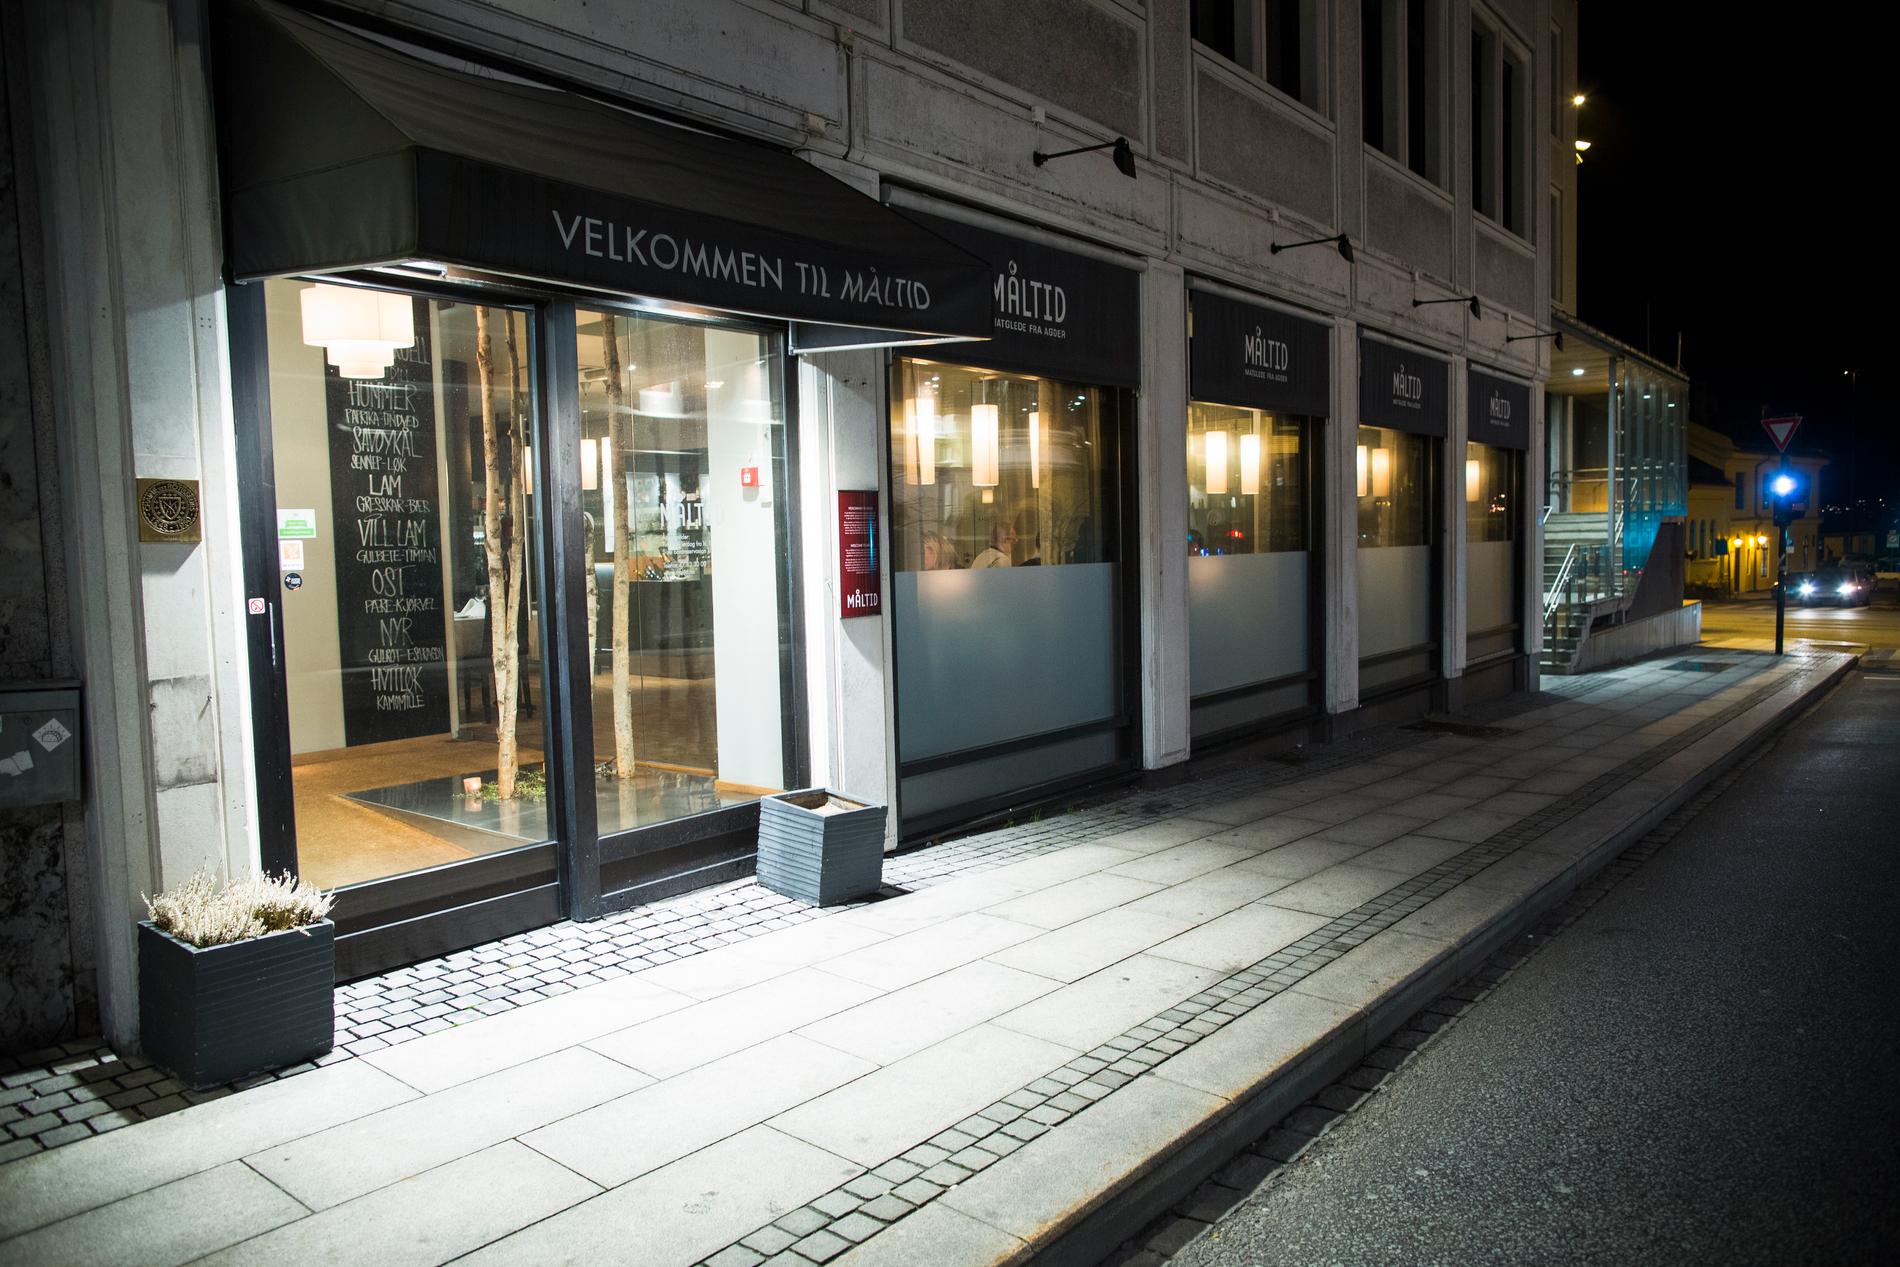 Restaurant Måltid stengte dørene i Tollbodgata like før jul. Foto: Sondre Steen Holvik.